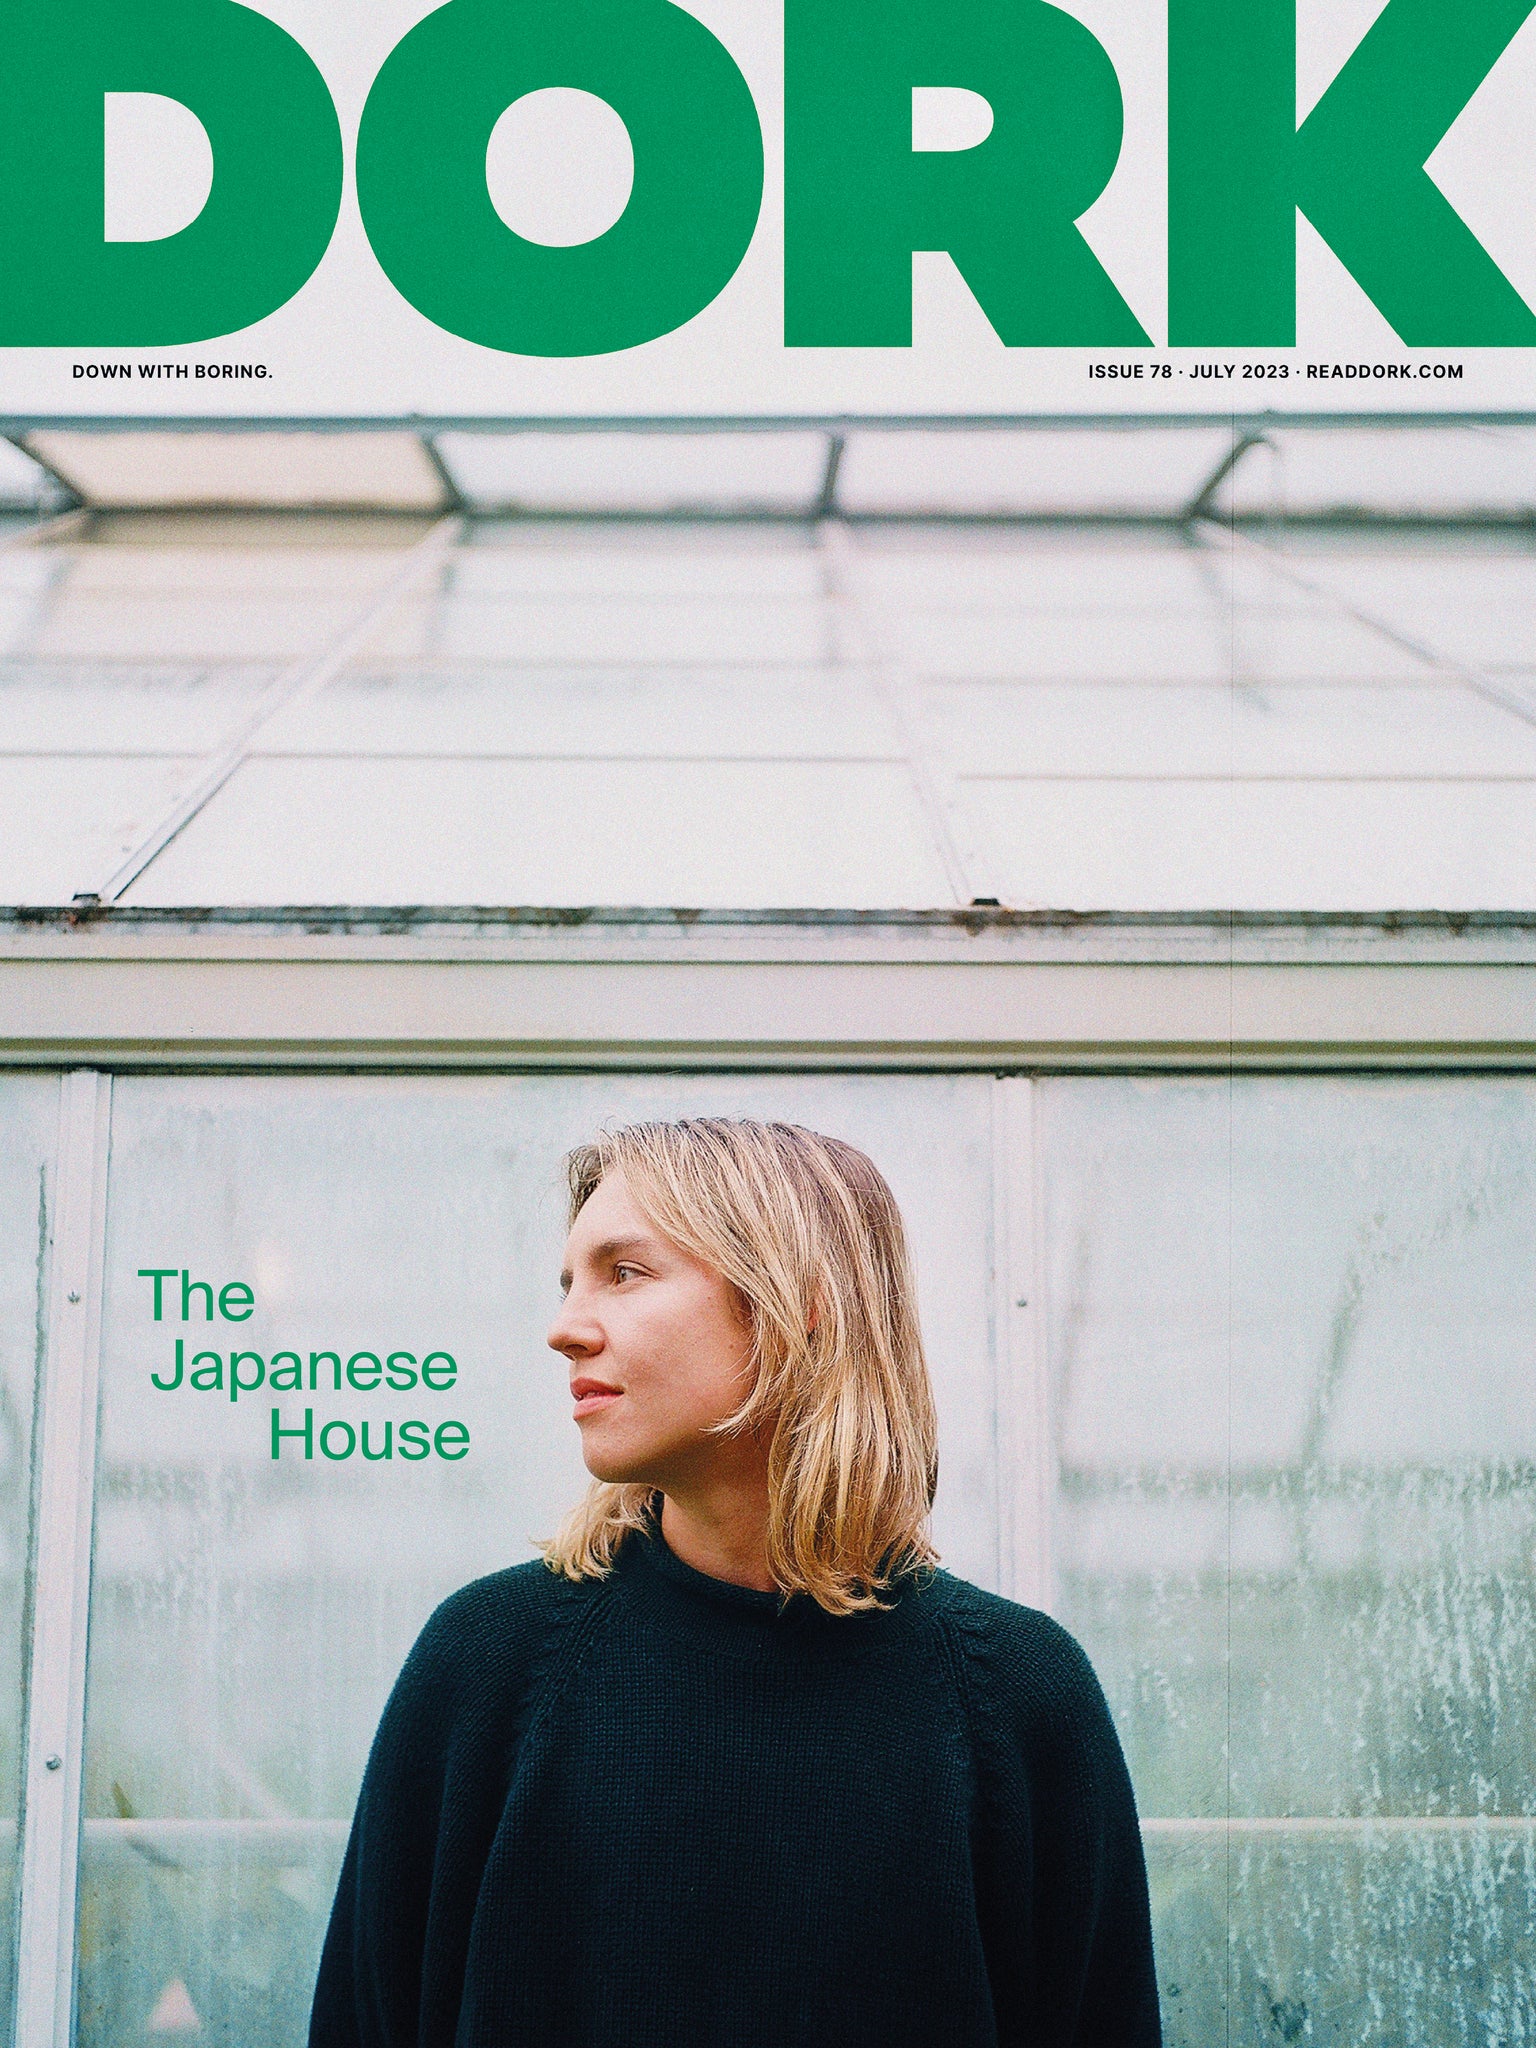 Dork, July 2023 (The Japanese House cover)